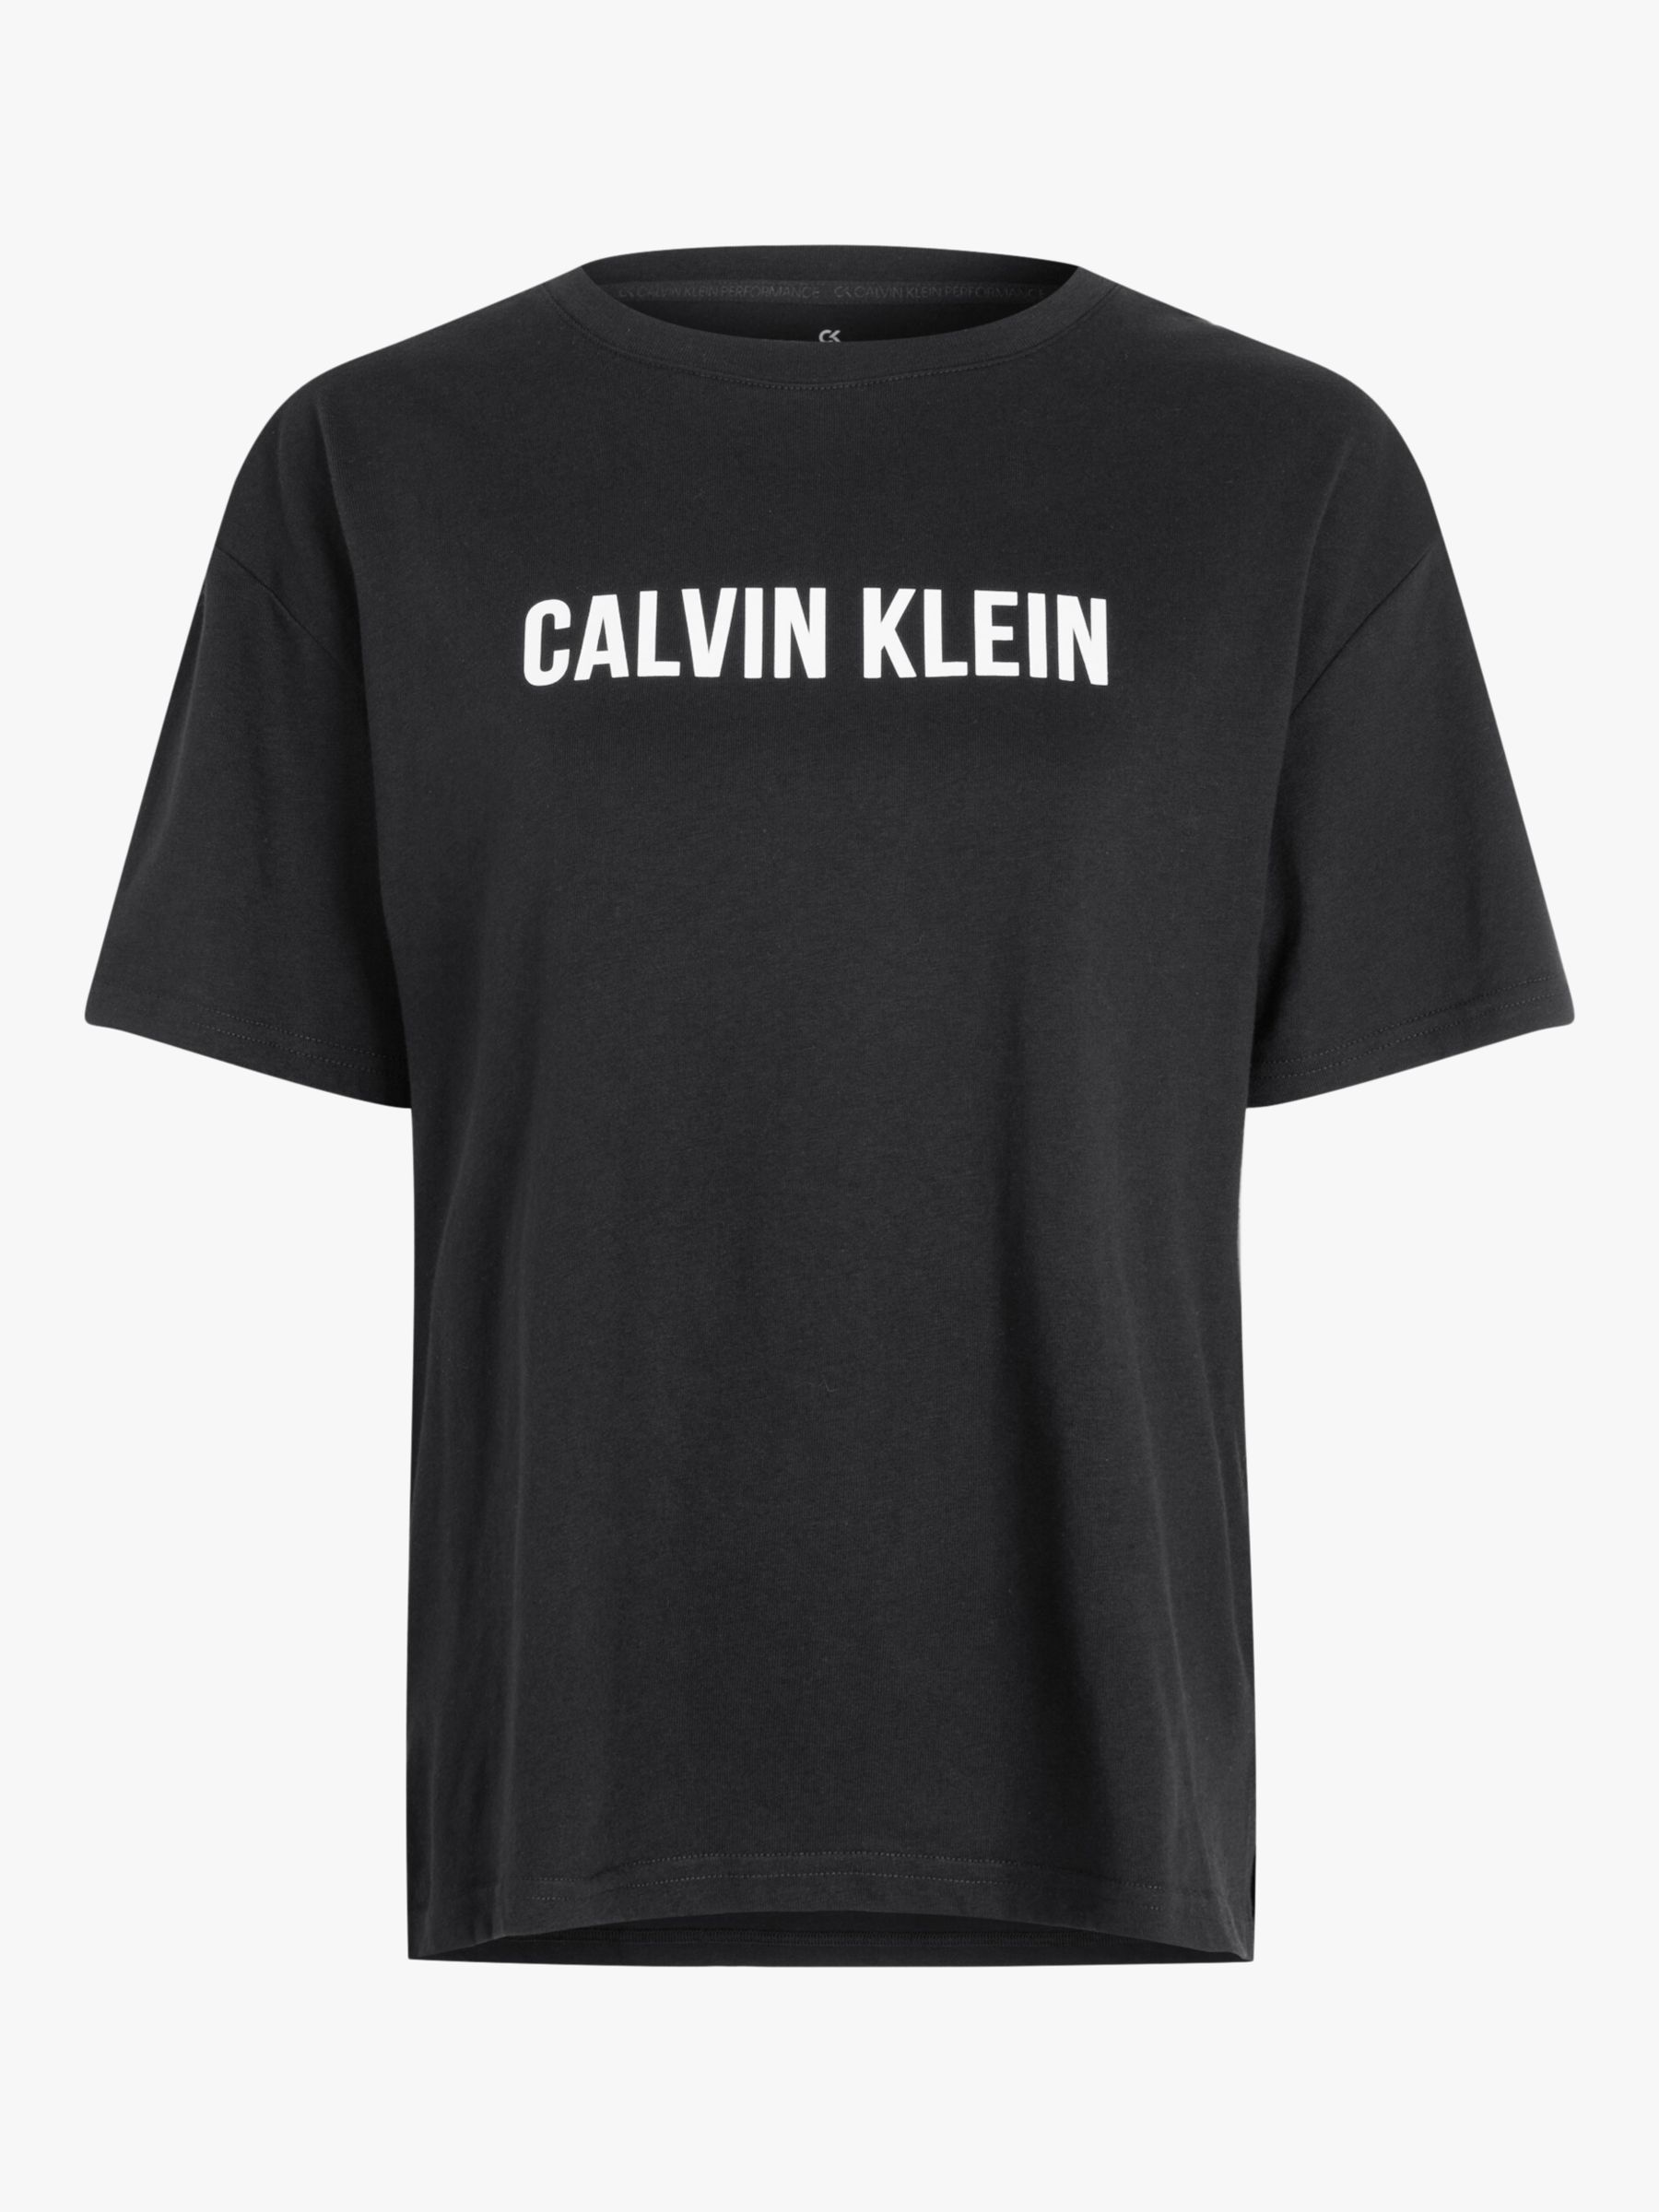 Calvin Klein Logo Boyfriend T-Shirt, Black at John Lewis & Partners